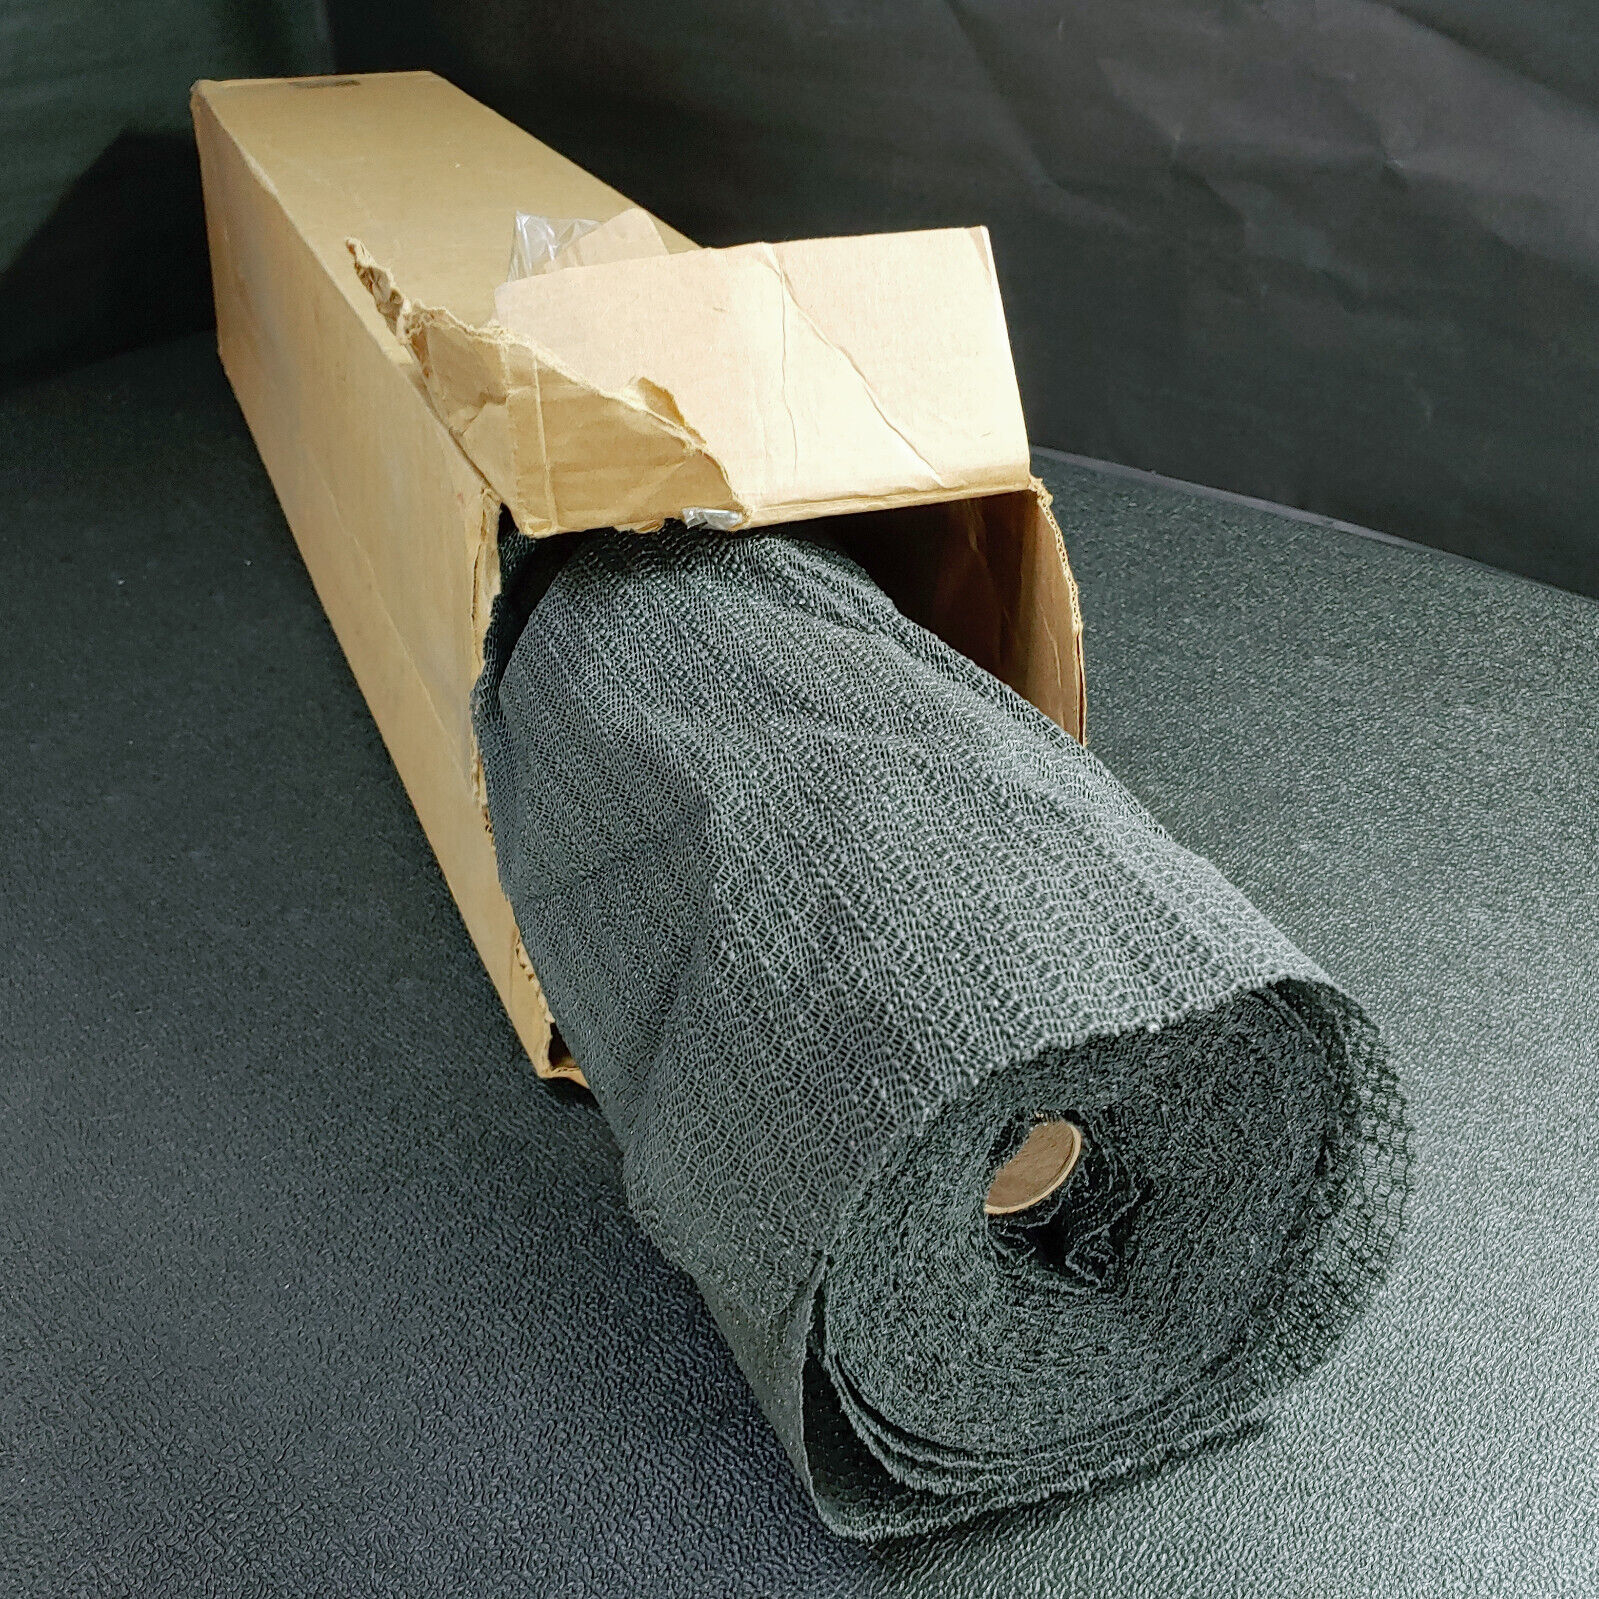 Wrap Pitmaster?s Choice Aluminum Foil, 37.5 Square Feet